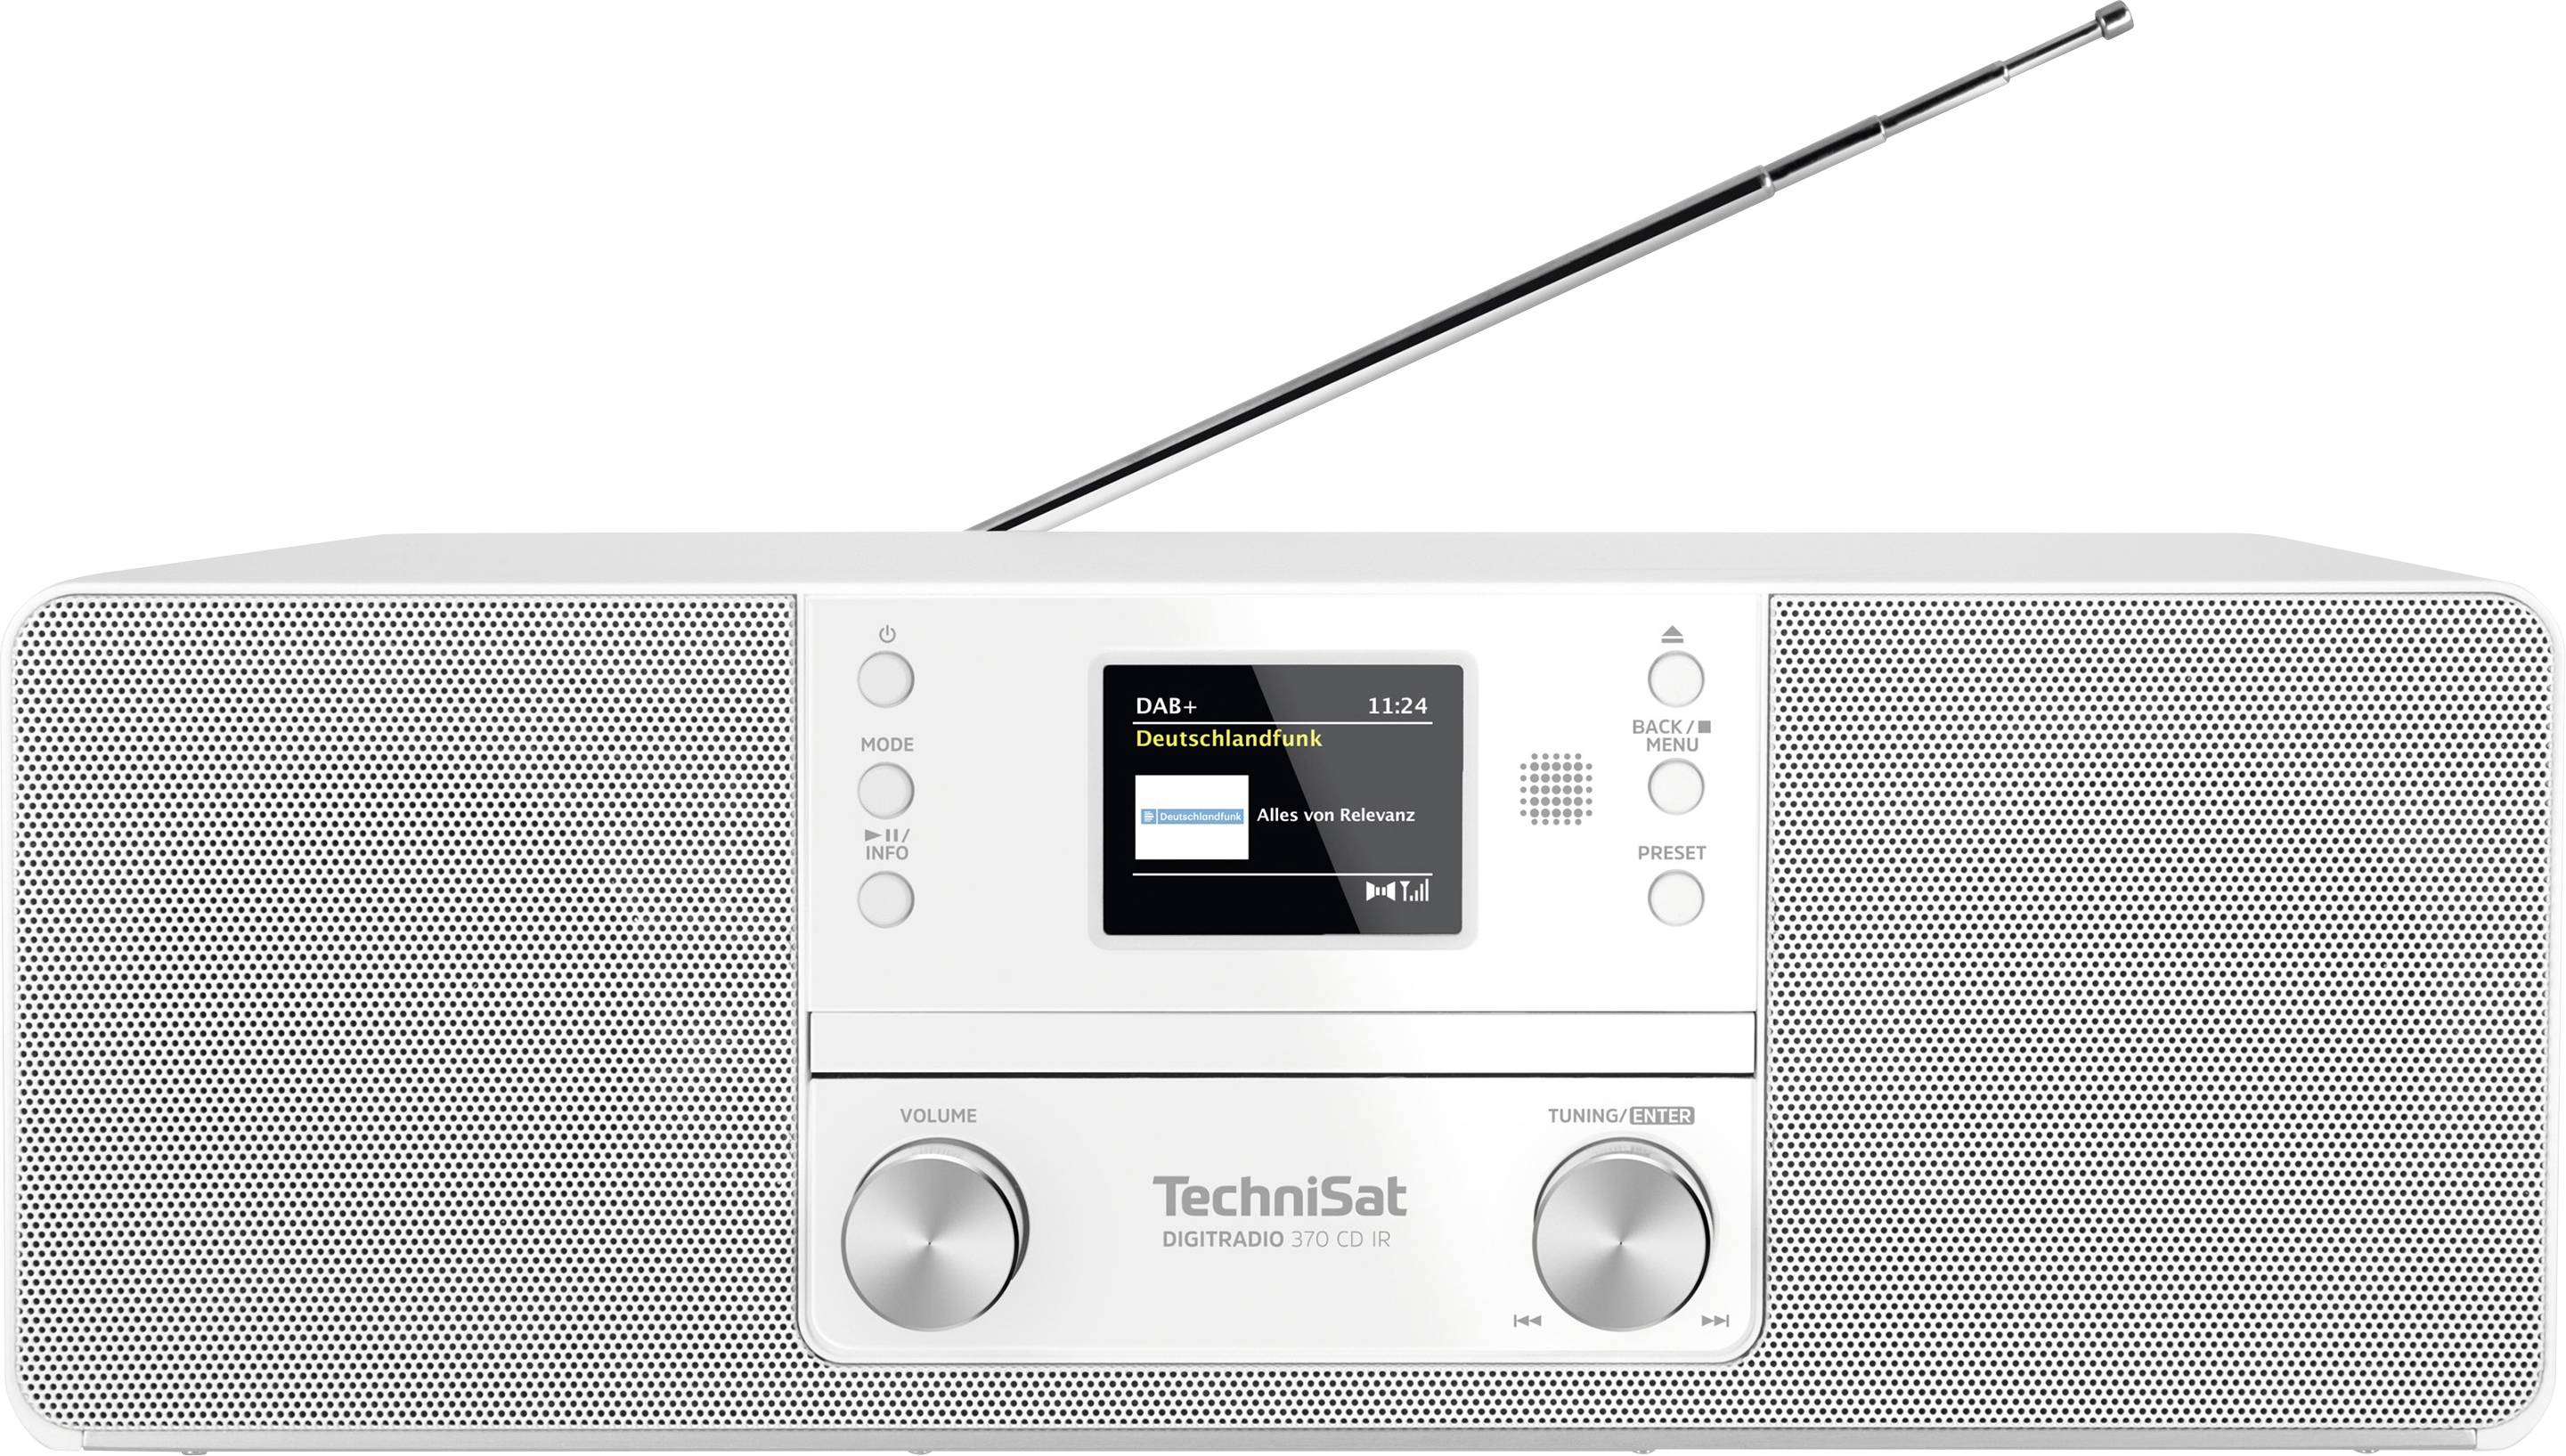 Buy TechniSat DIGITRADIO 370 CD IR Desk radio DAB+, DAB, FM, Internet  Wi-Fi, Bluetooth, CD, USB, Internet radio Incl. remot | Conrad Electronic